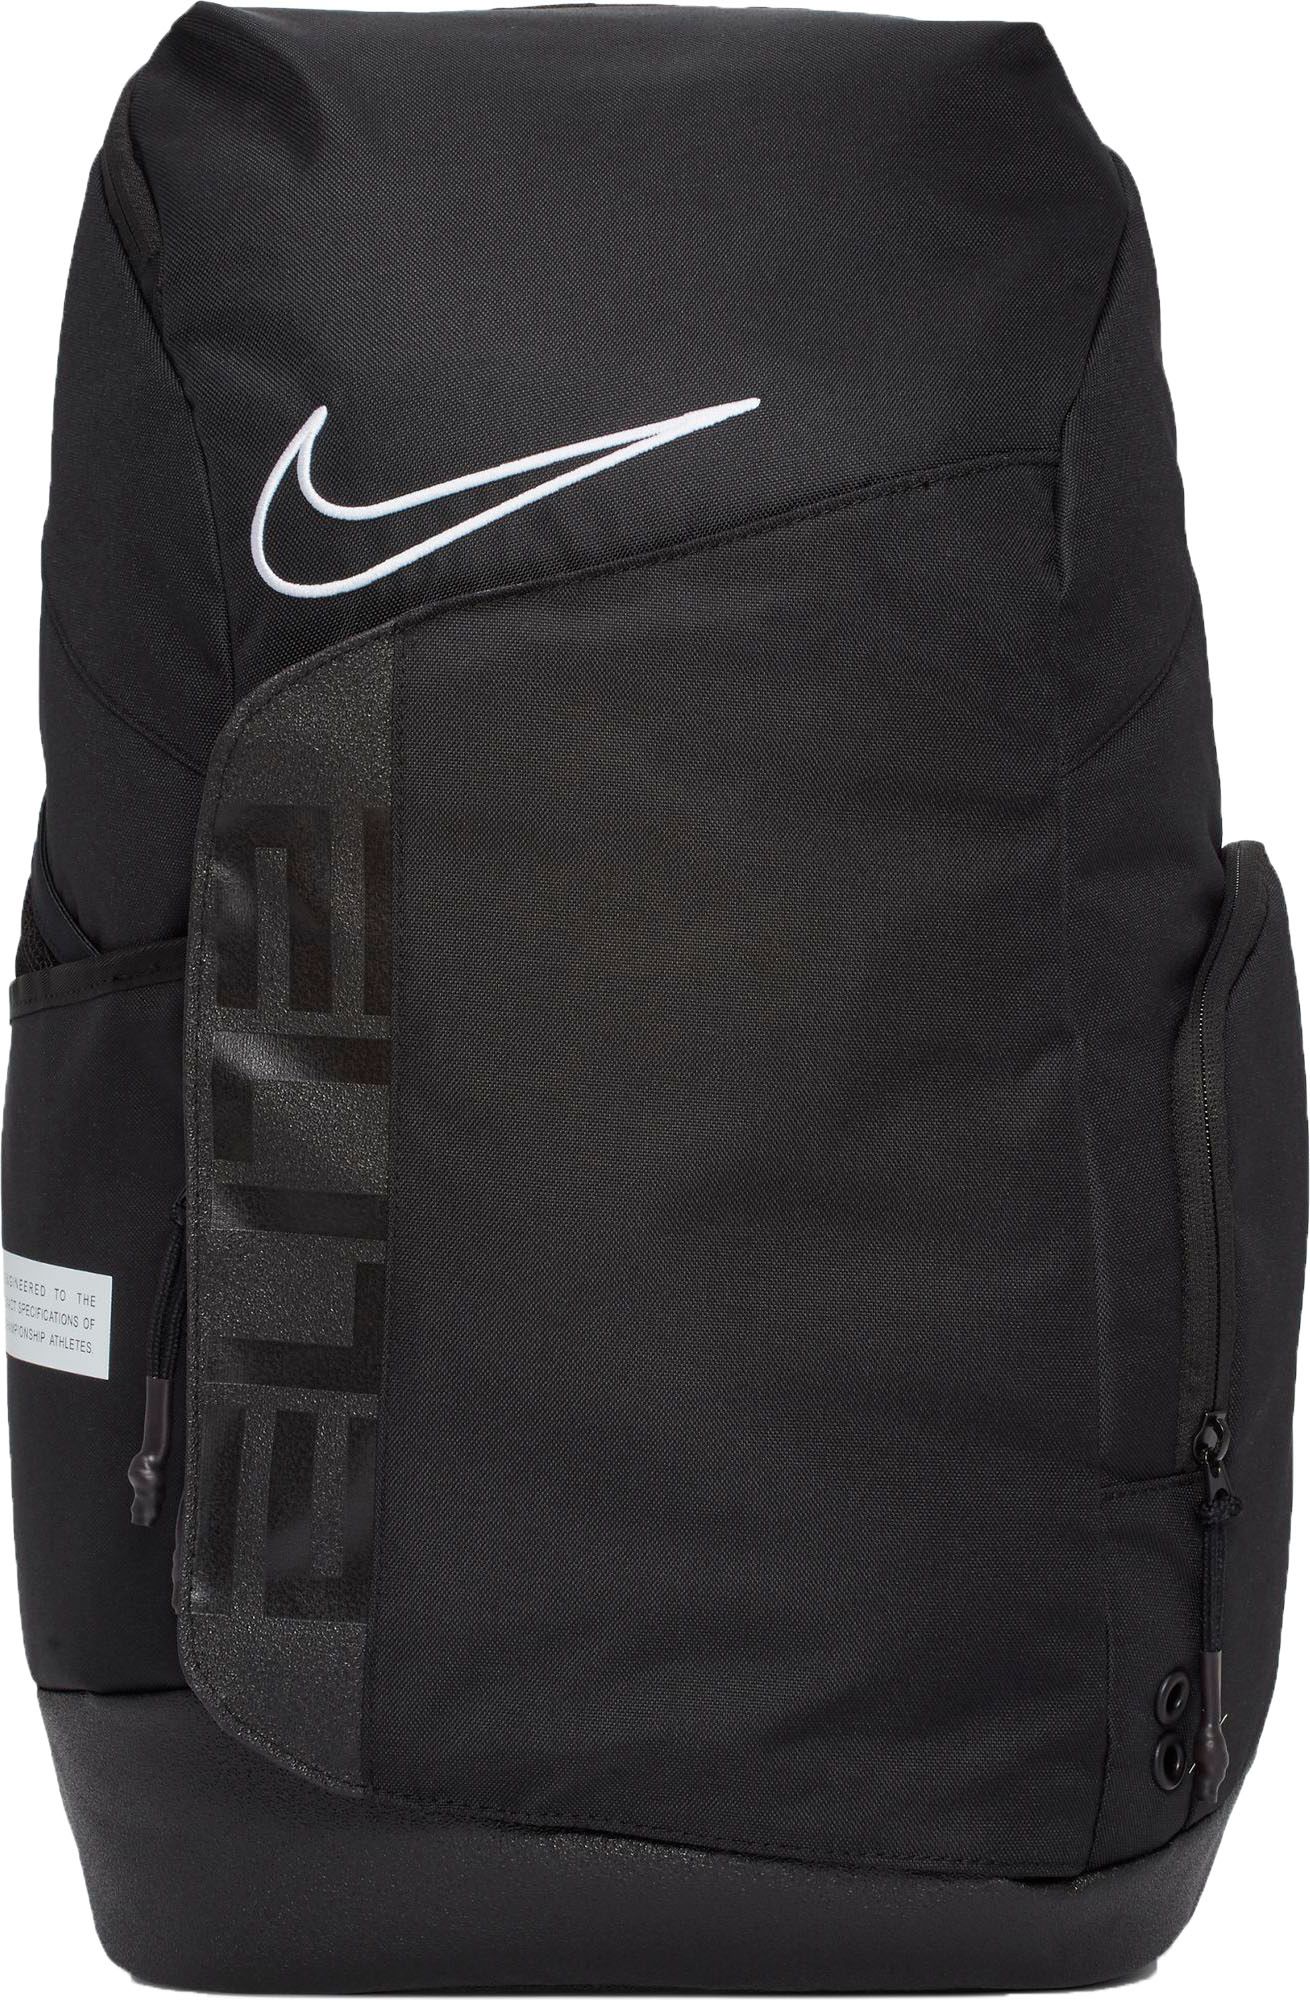 Nike Elite Pro Basketball Backpack, Black